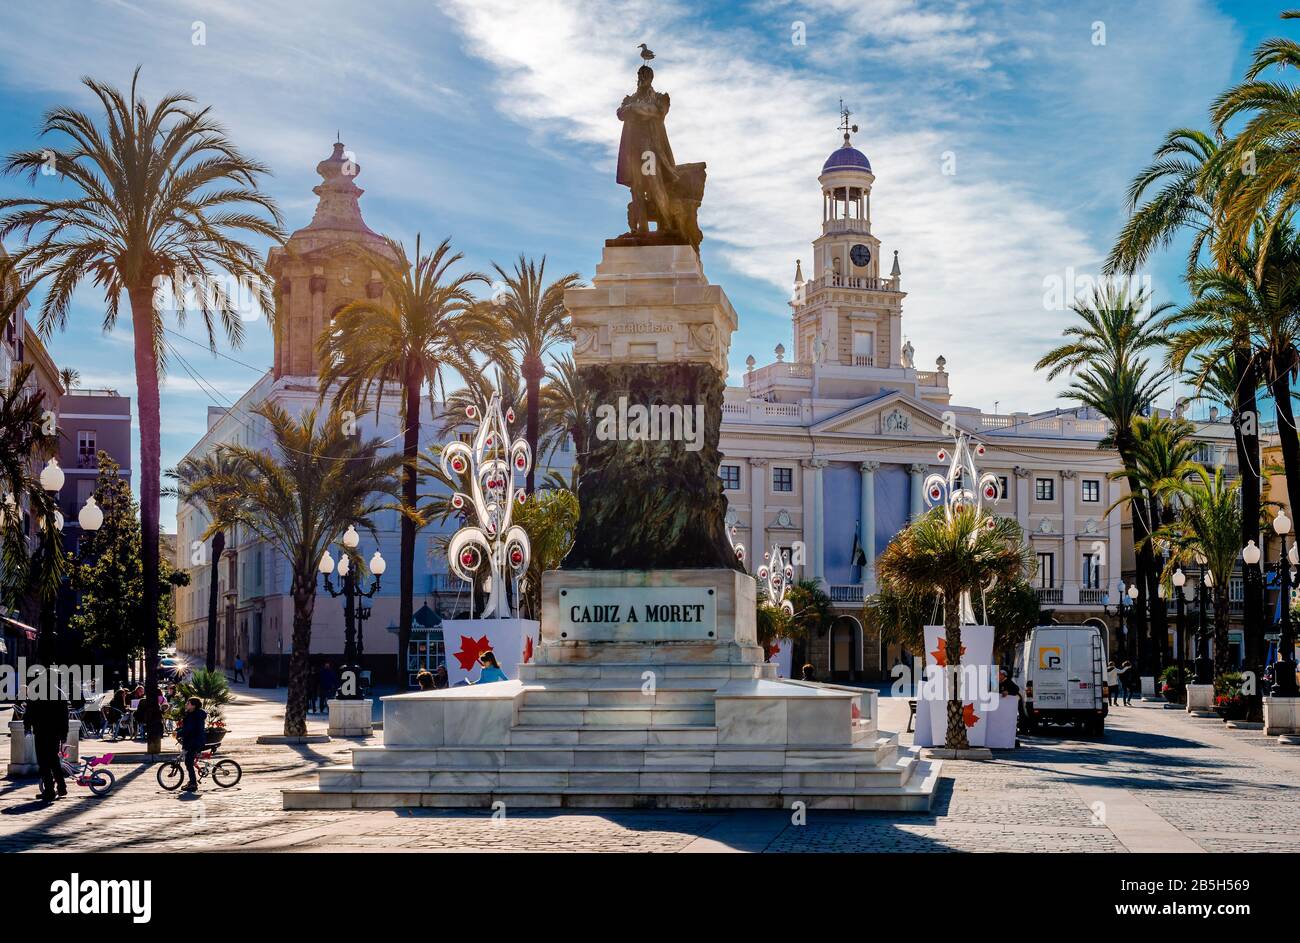 Cadiz / Spain - December 22 1014: View of Plaza de San Juan de Dios with the statue of Cadiz politician Segismundo Moret and the Old Town Hall. Stock Photo